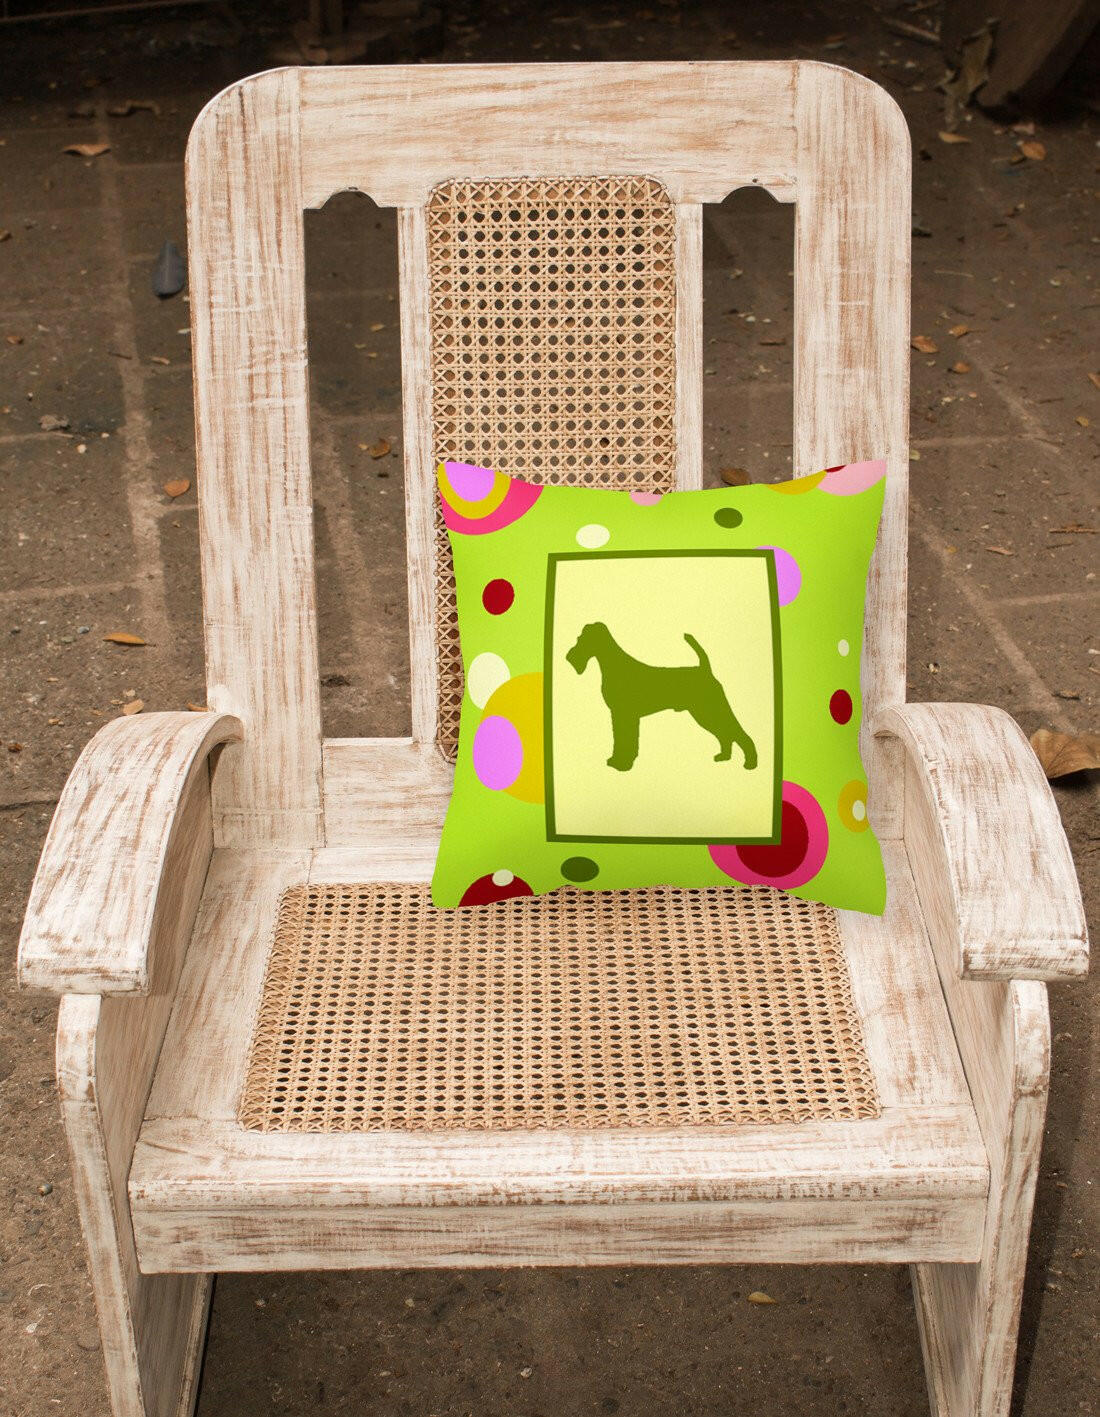 Lime Green Dots Irish Terrier Fabric Decorative Pillow CK1039PW1414 by Caroline's Treasures